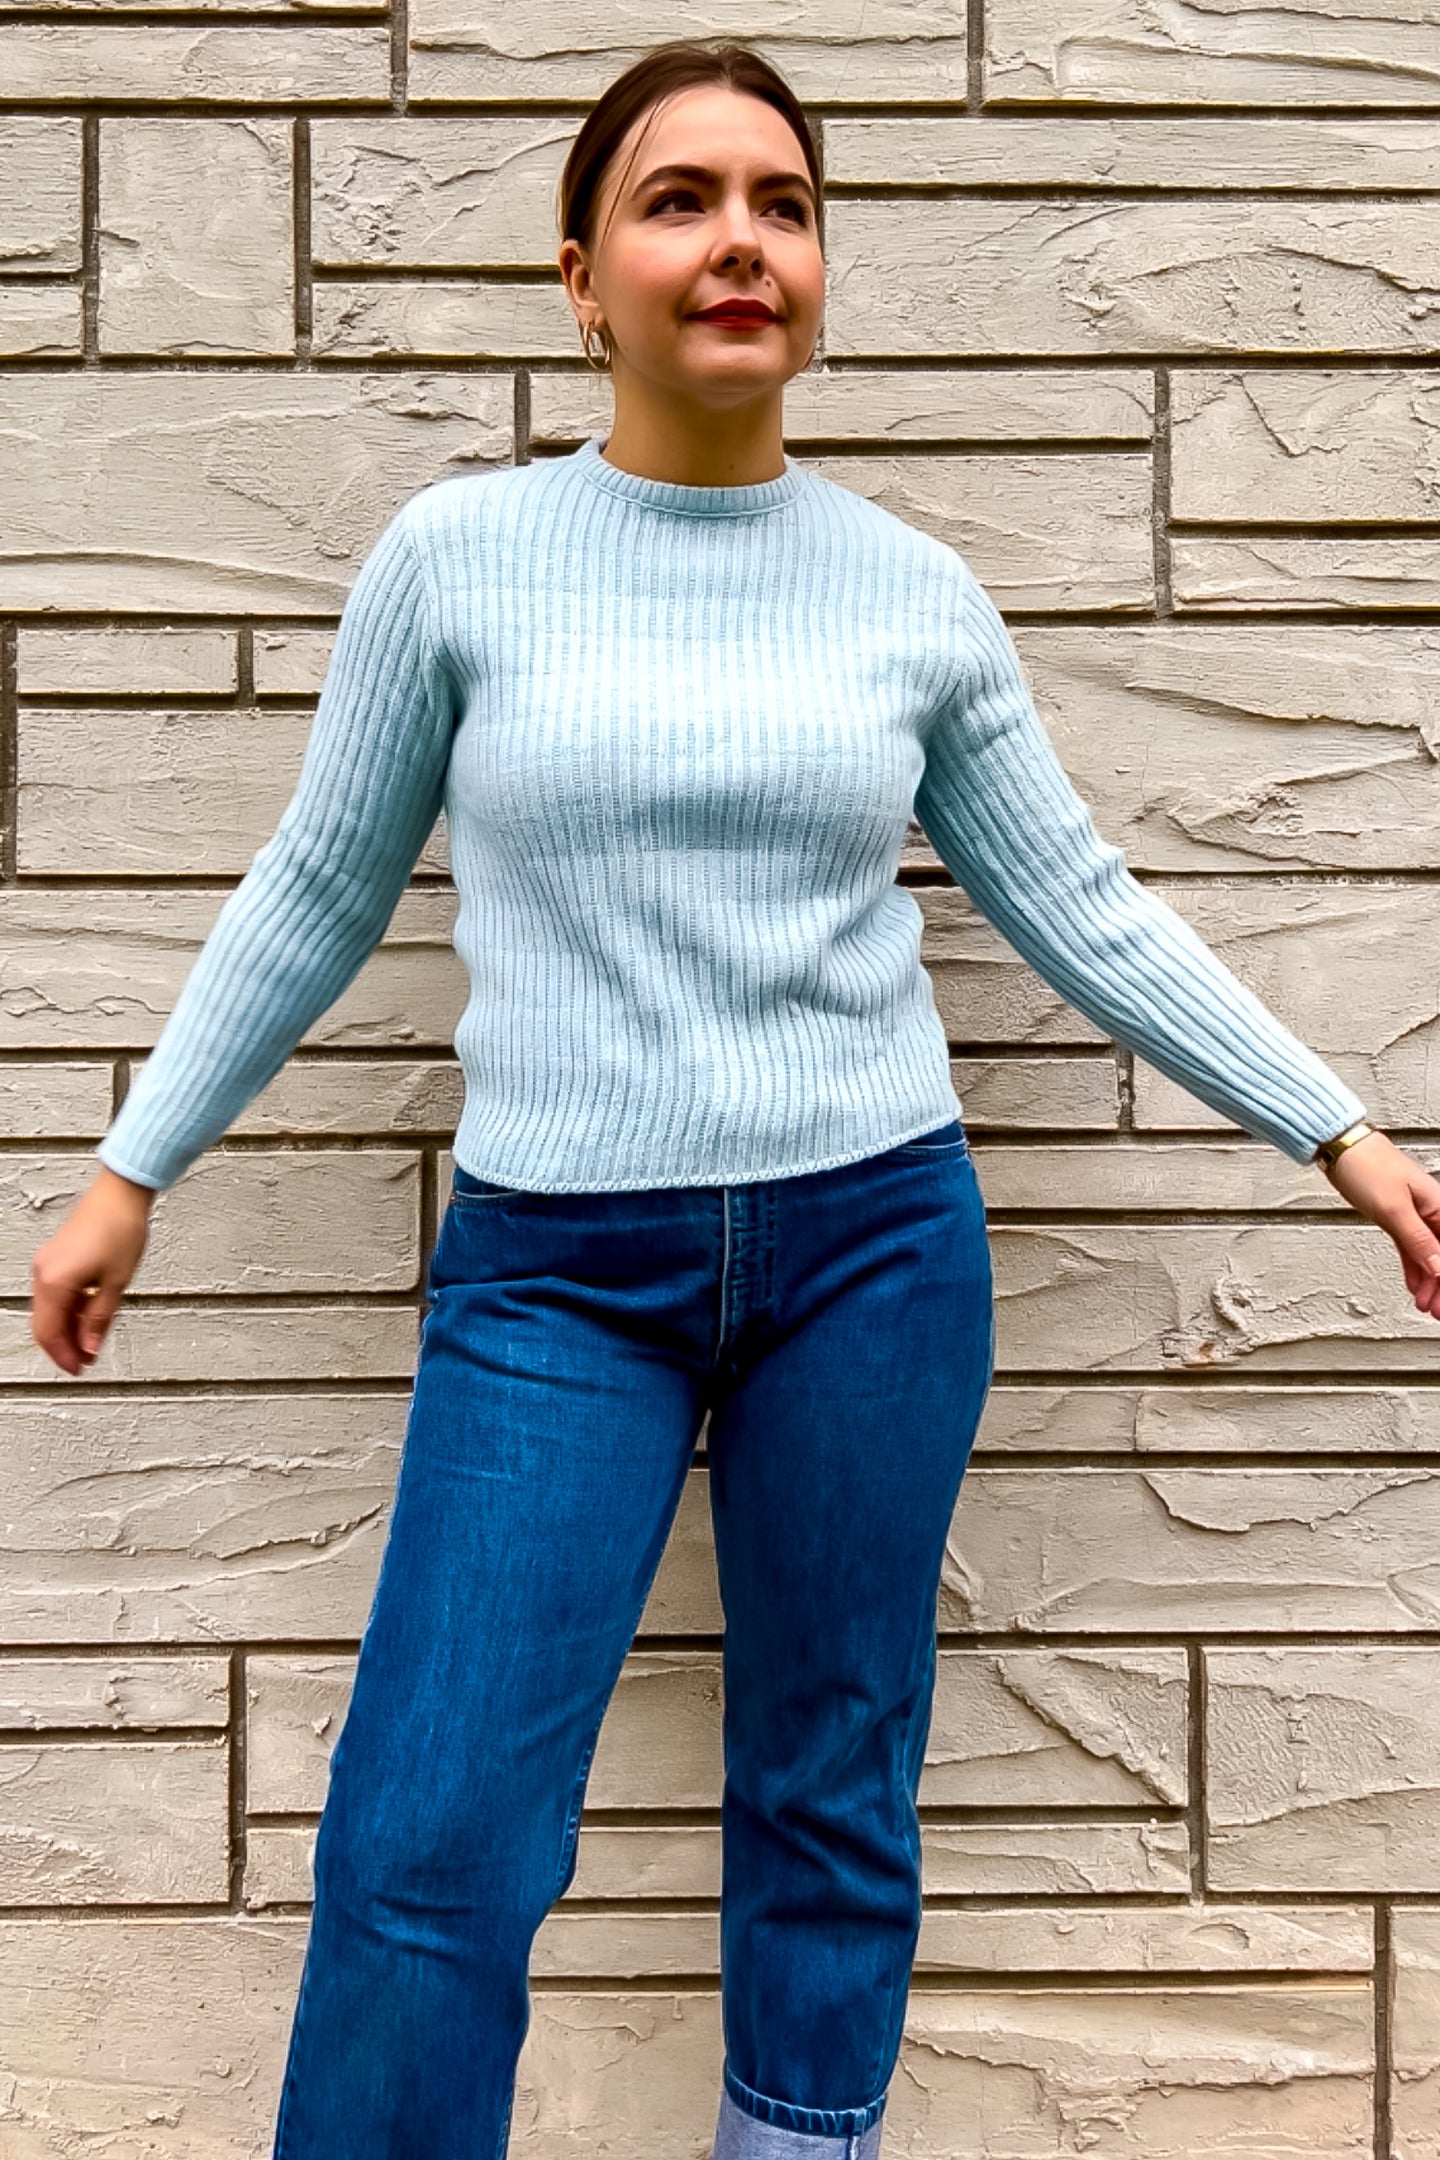 1970s Light Blue Ribbed Sweater / Small - Medium